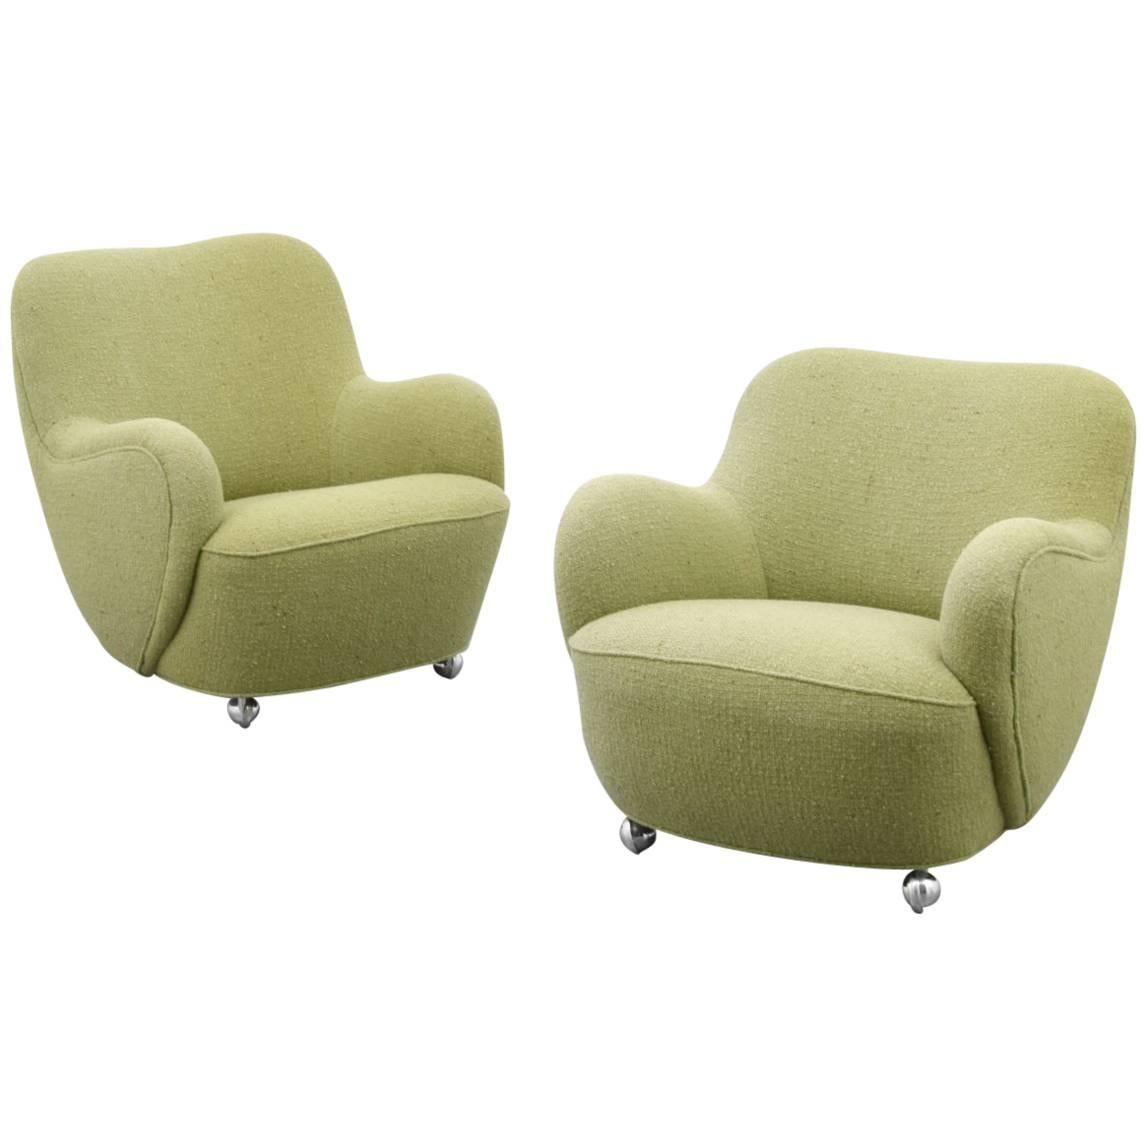 Pair of Rare Vladimir Kagan "Barrel" Lounge Chairs